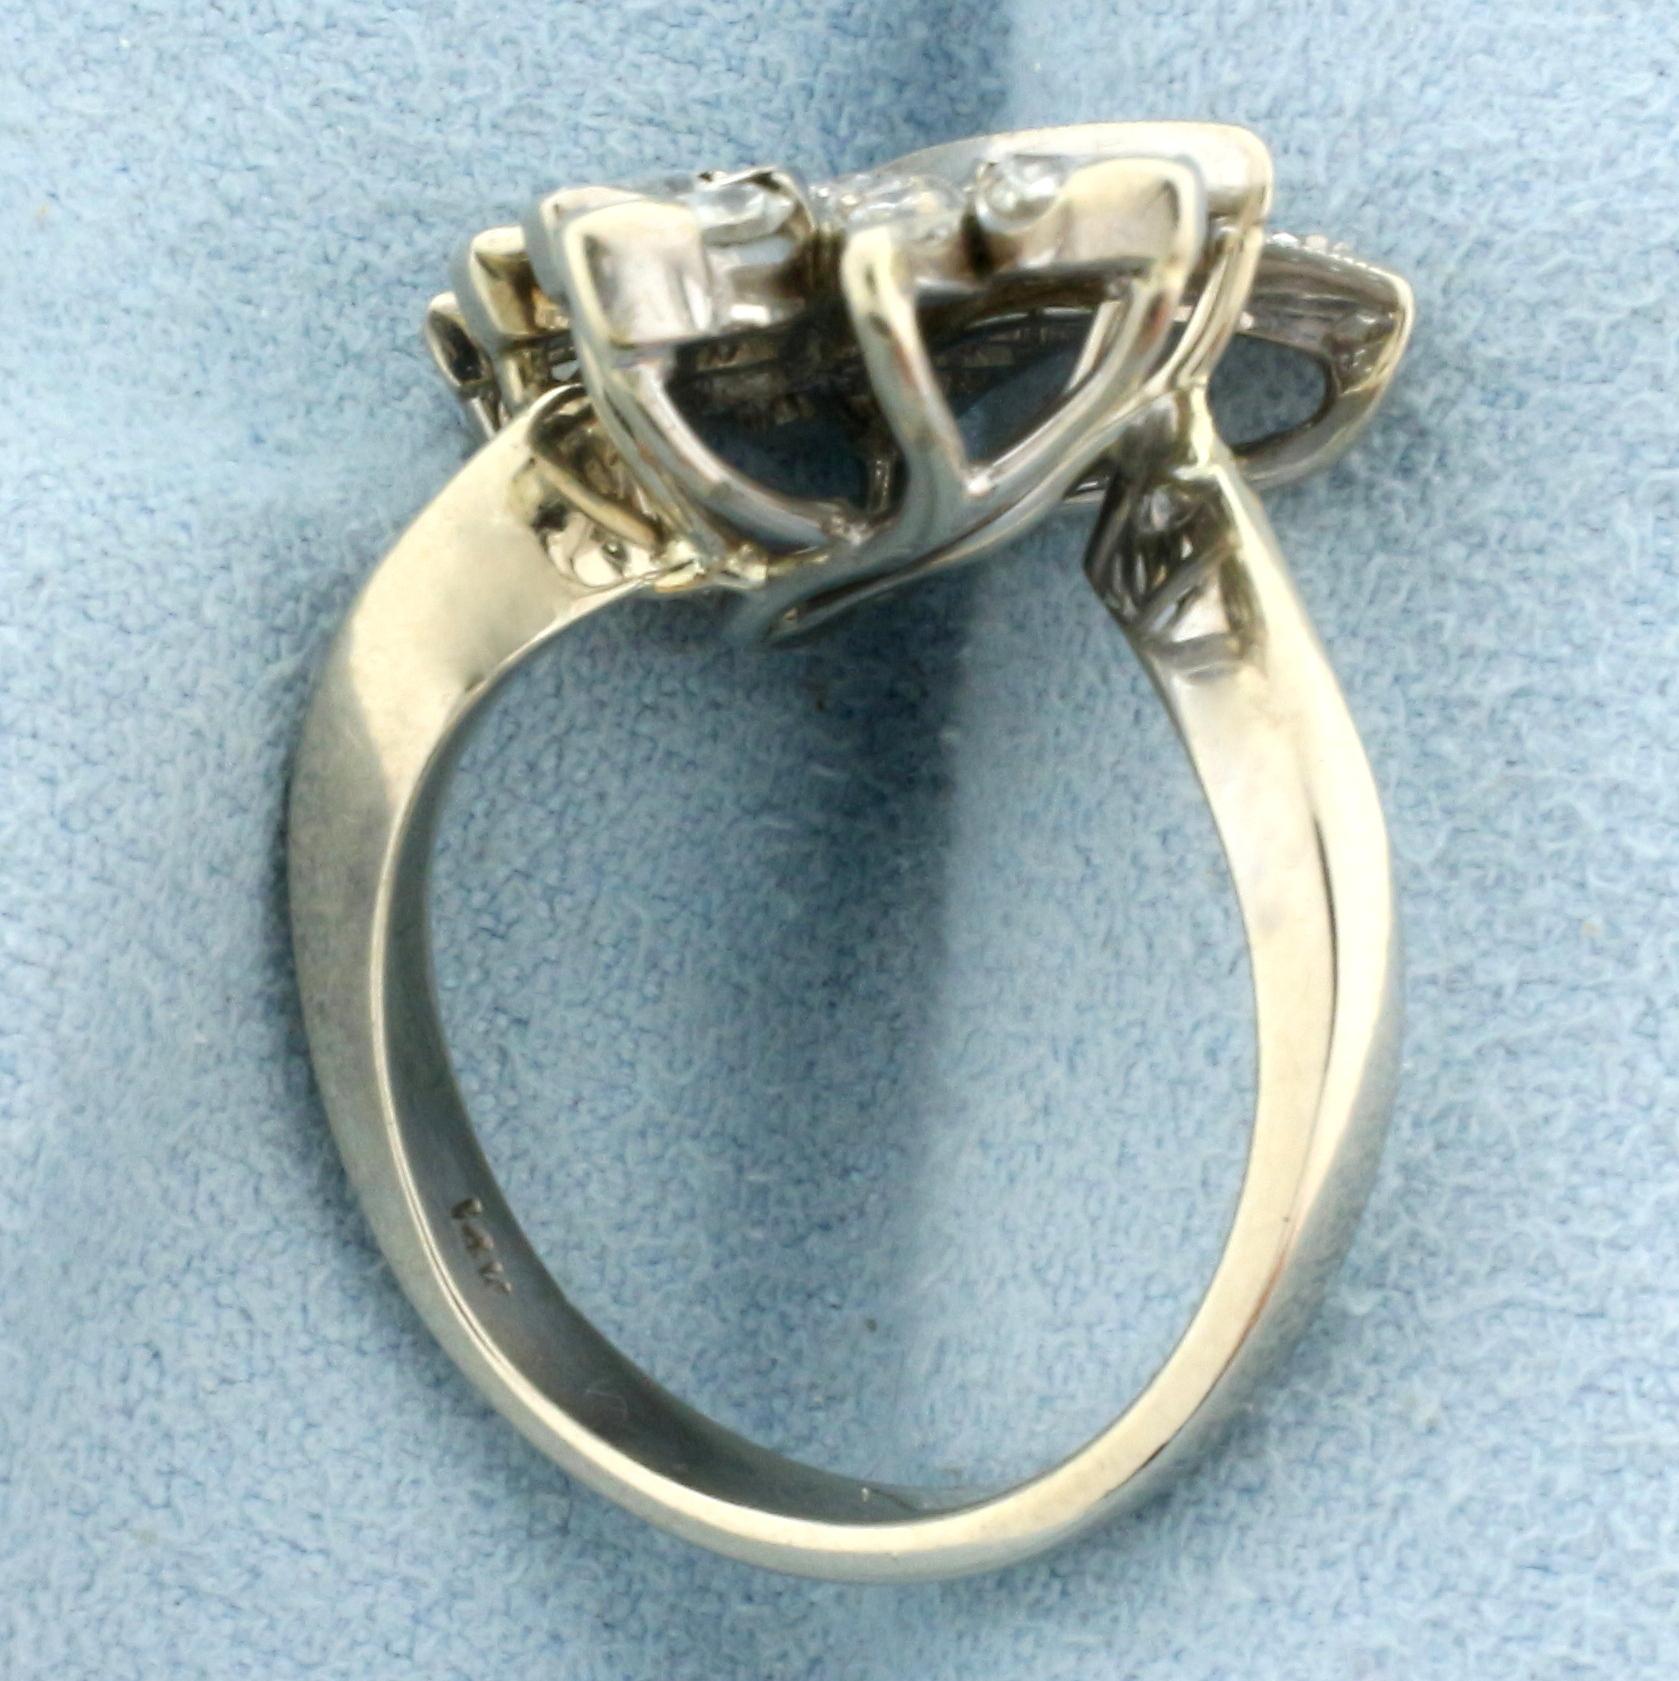 1ct Nature Design Diamond Ring In 14k White Gold